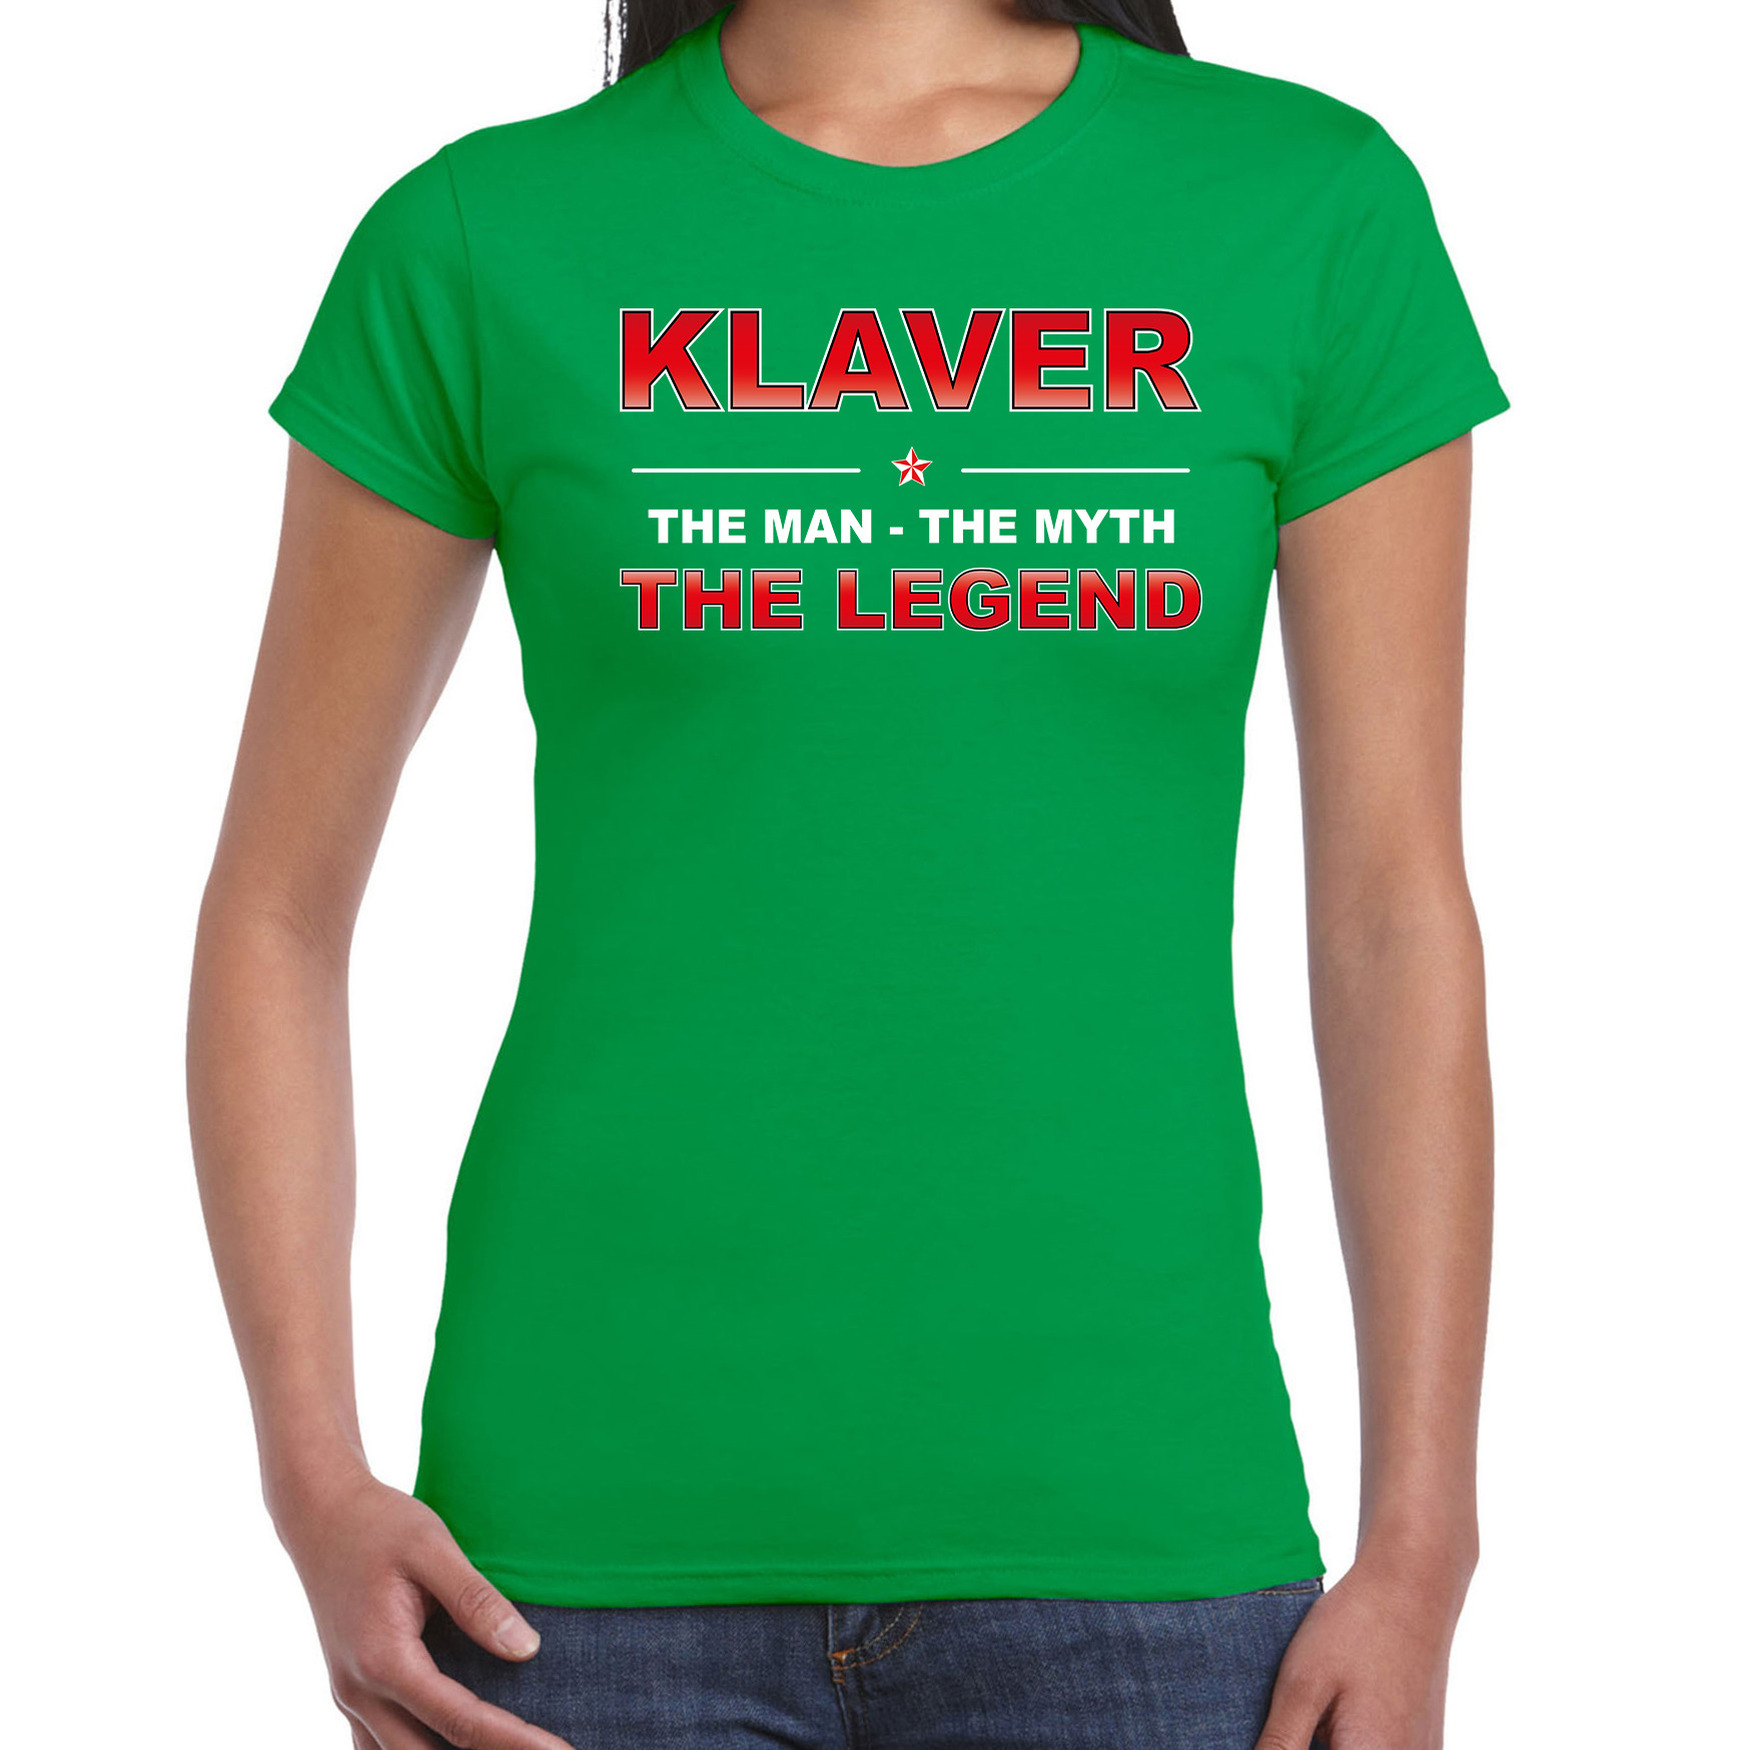 Klaver naam t-shirt the man-the myth-the legend groen voor dames